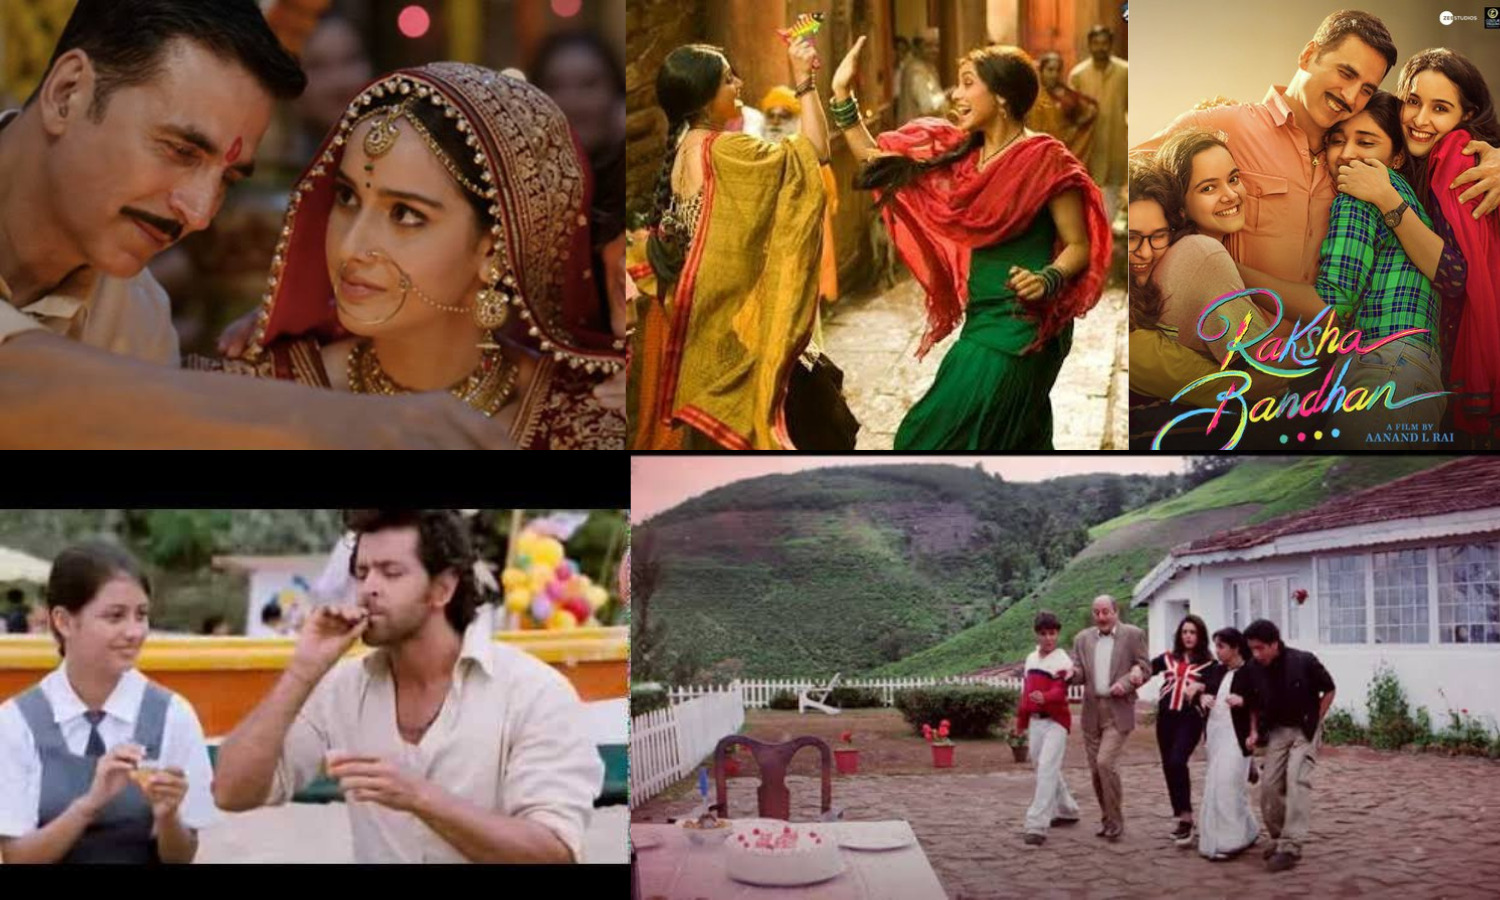 Raksha Bandhan 2022 Songs: Raksha Bandhan Bollywood movies songs that should be in your playlist